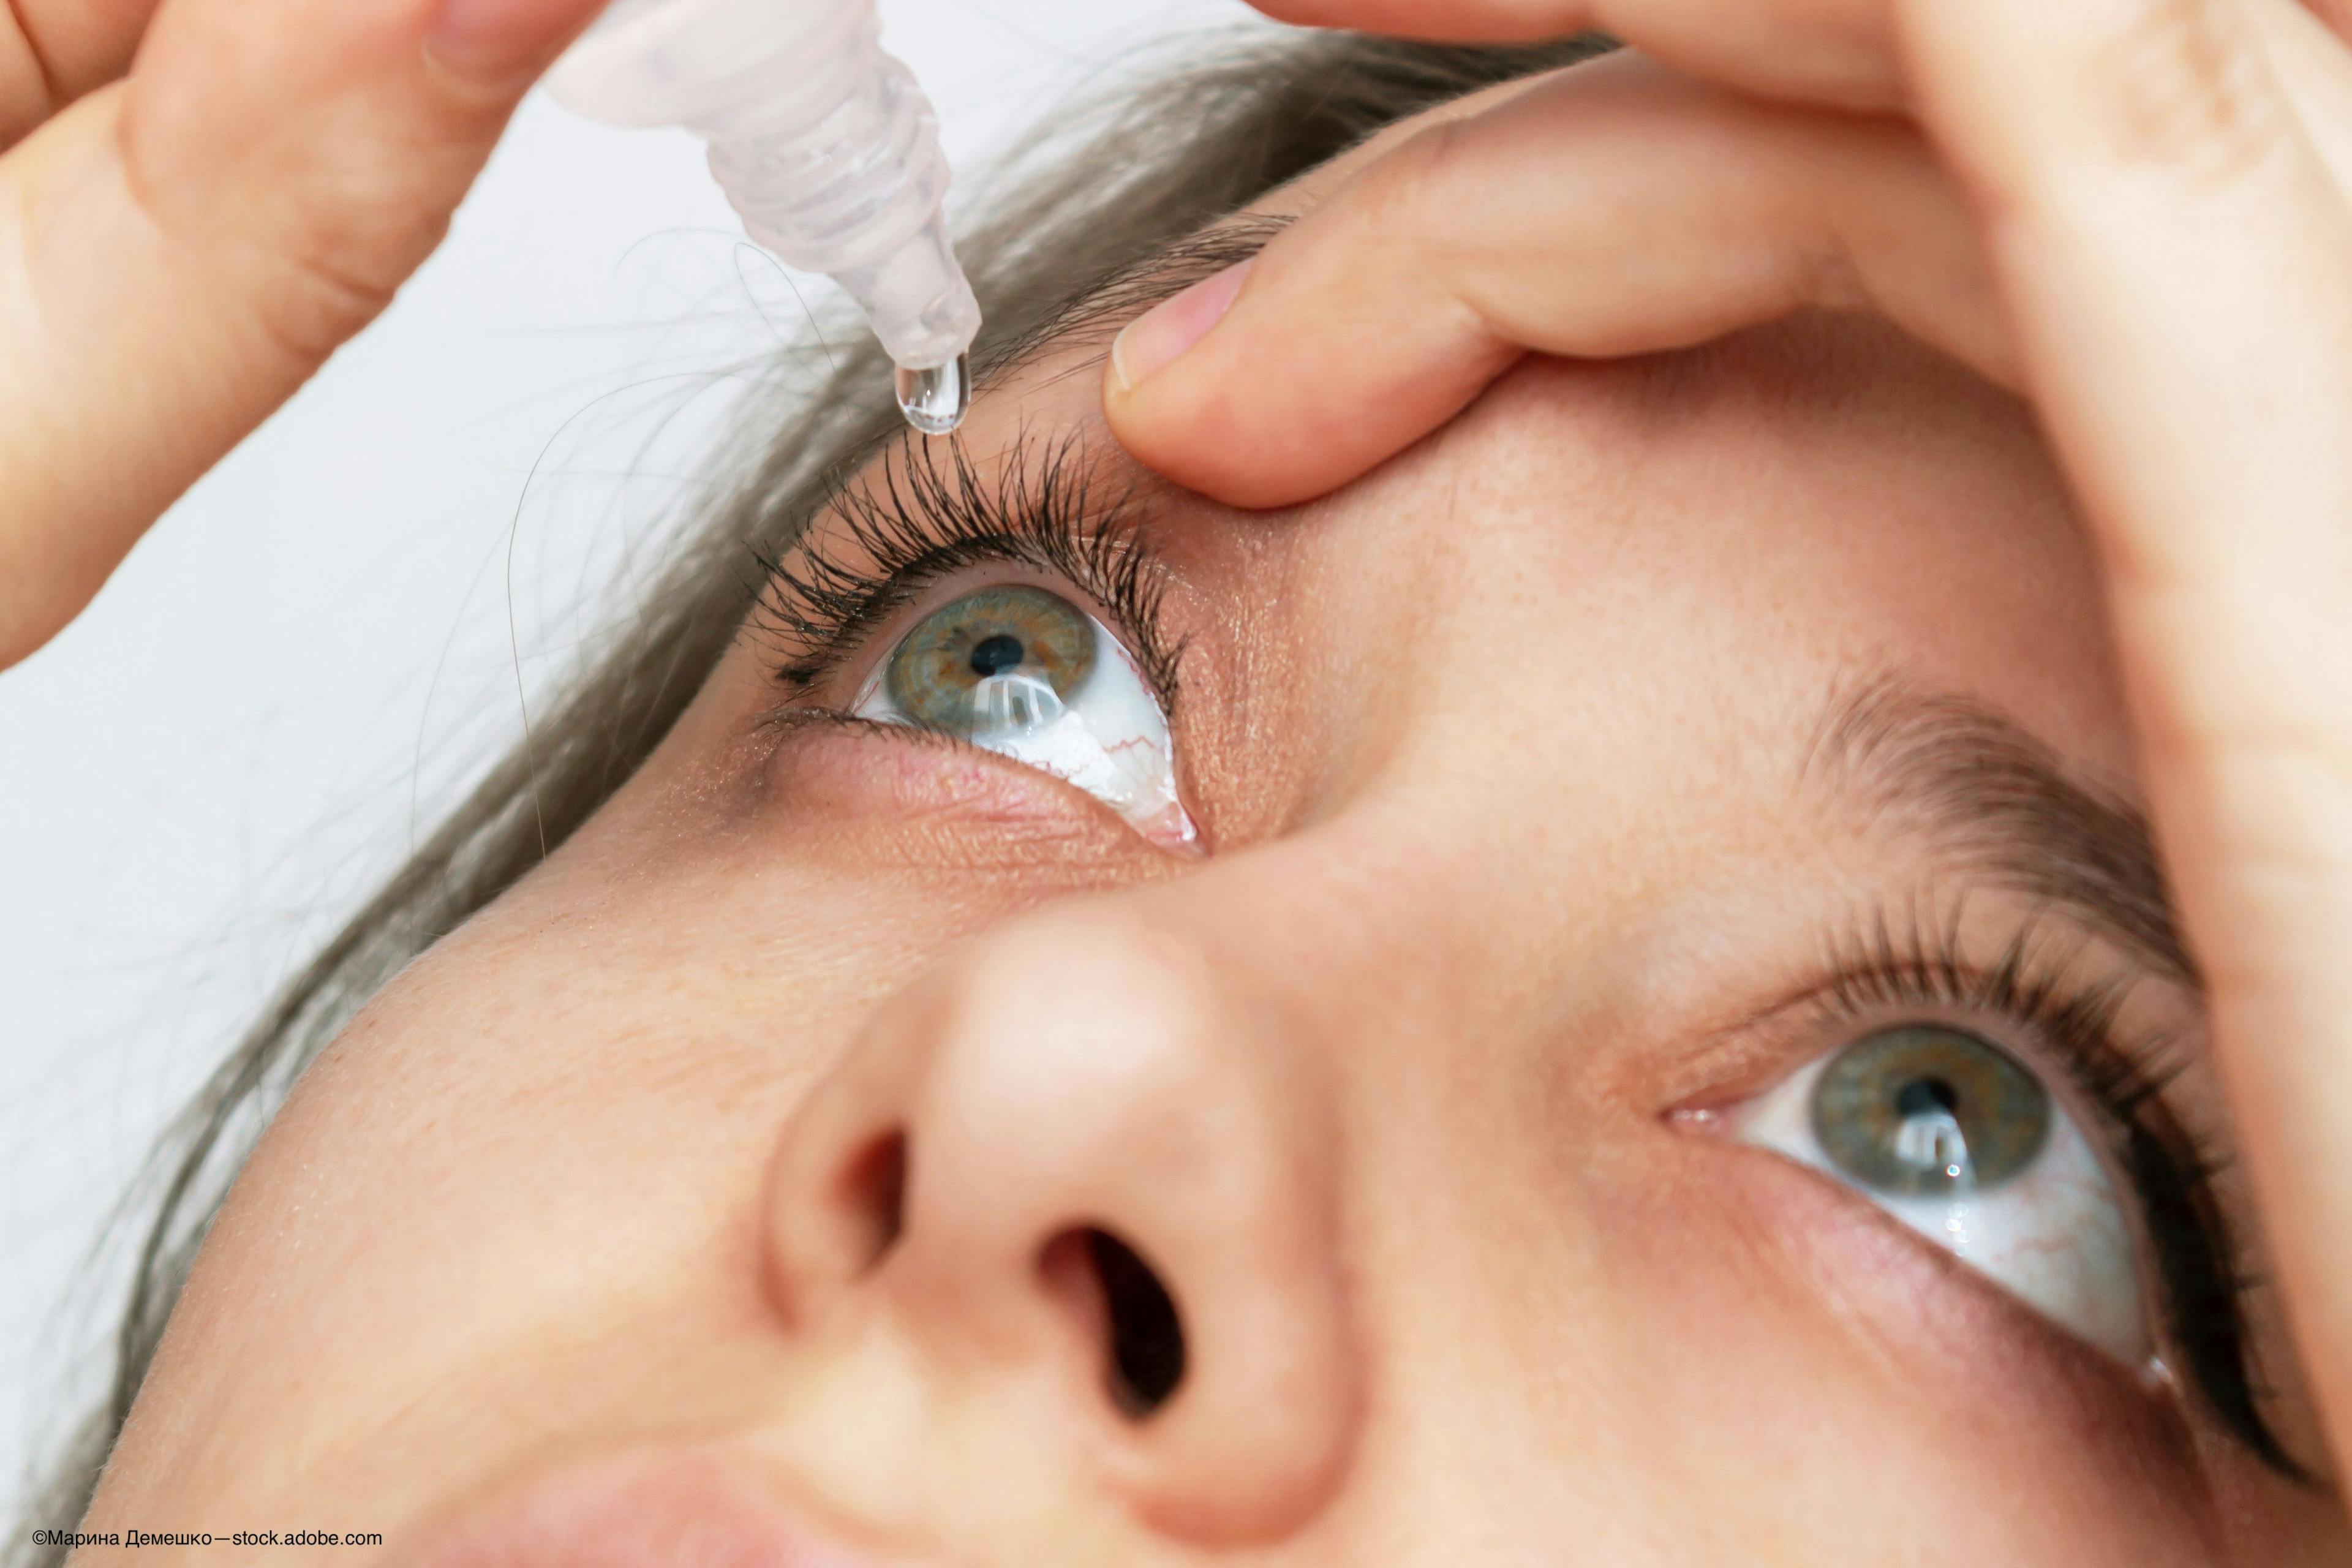 eye drop OK-101 ophthalmic solution instilled in eye for treatment of dry eye disease - Image credit: Adobe Stock / Марина Демешко